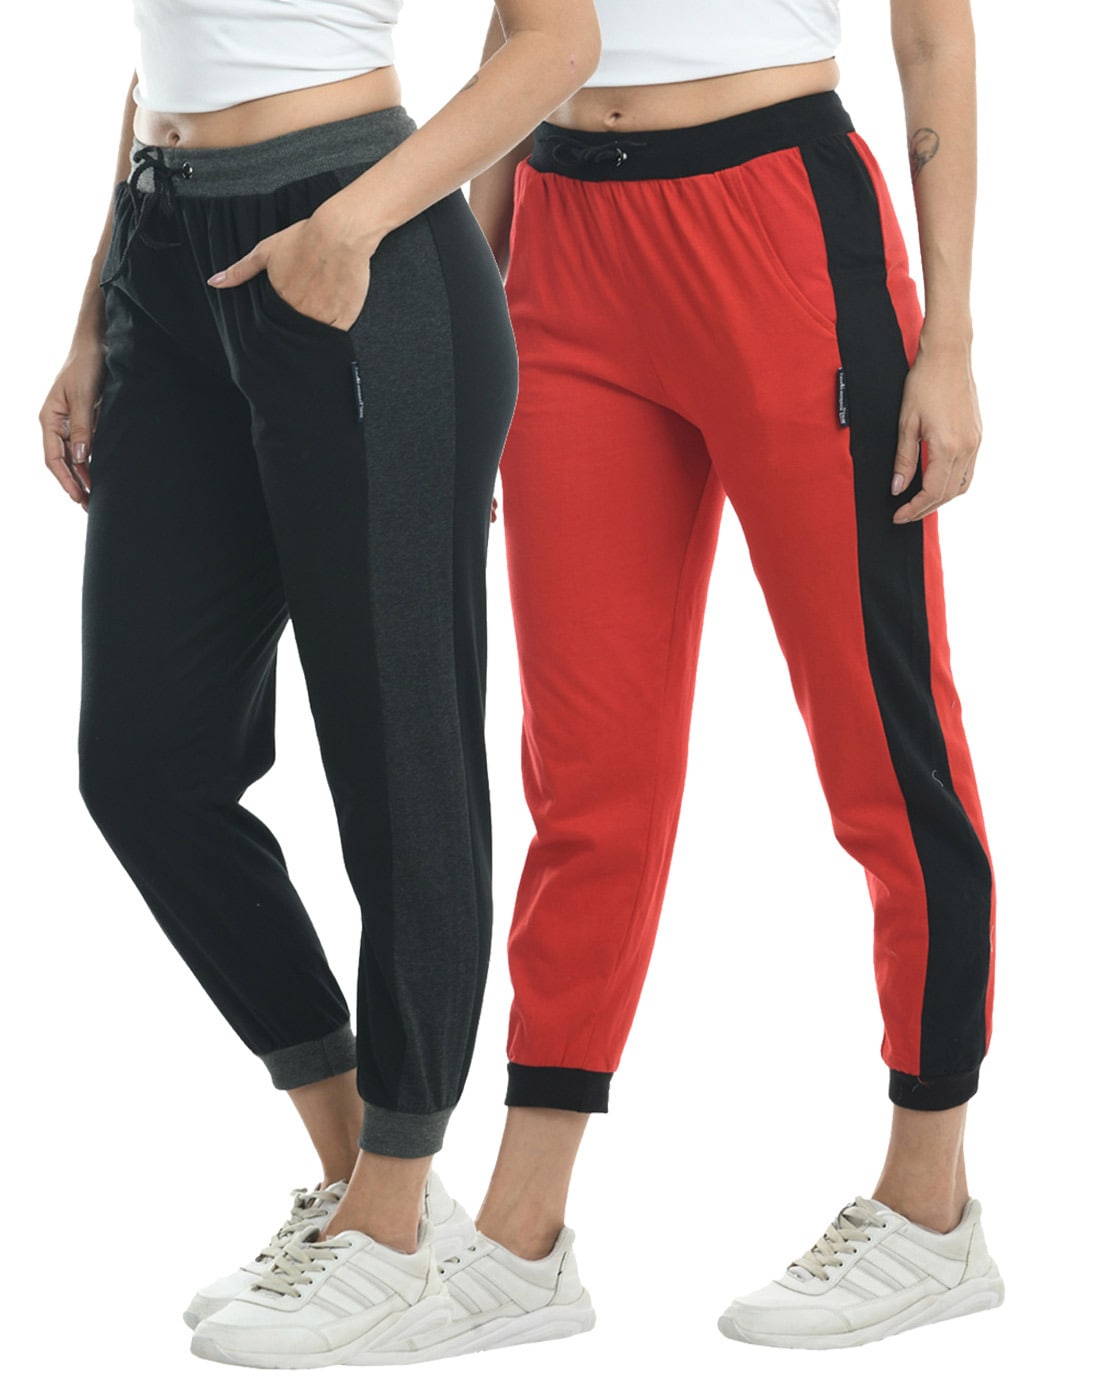 Buy Ruggstar branded Dryfit Lycra track pant for menBlack Red ZipperBlack  White Zipper Online at Shopclues